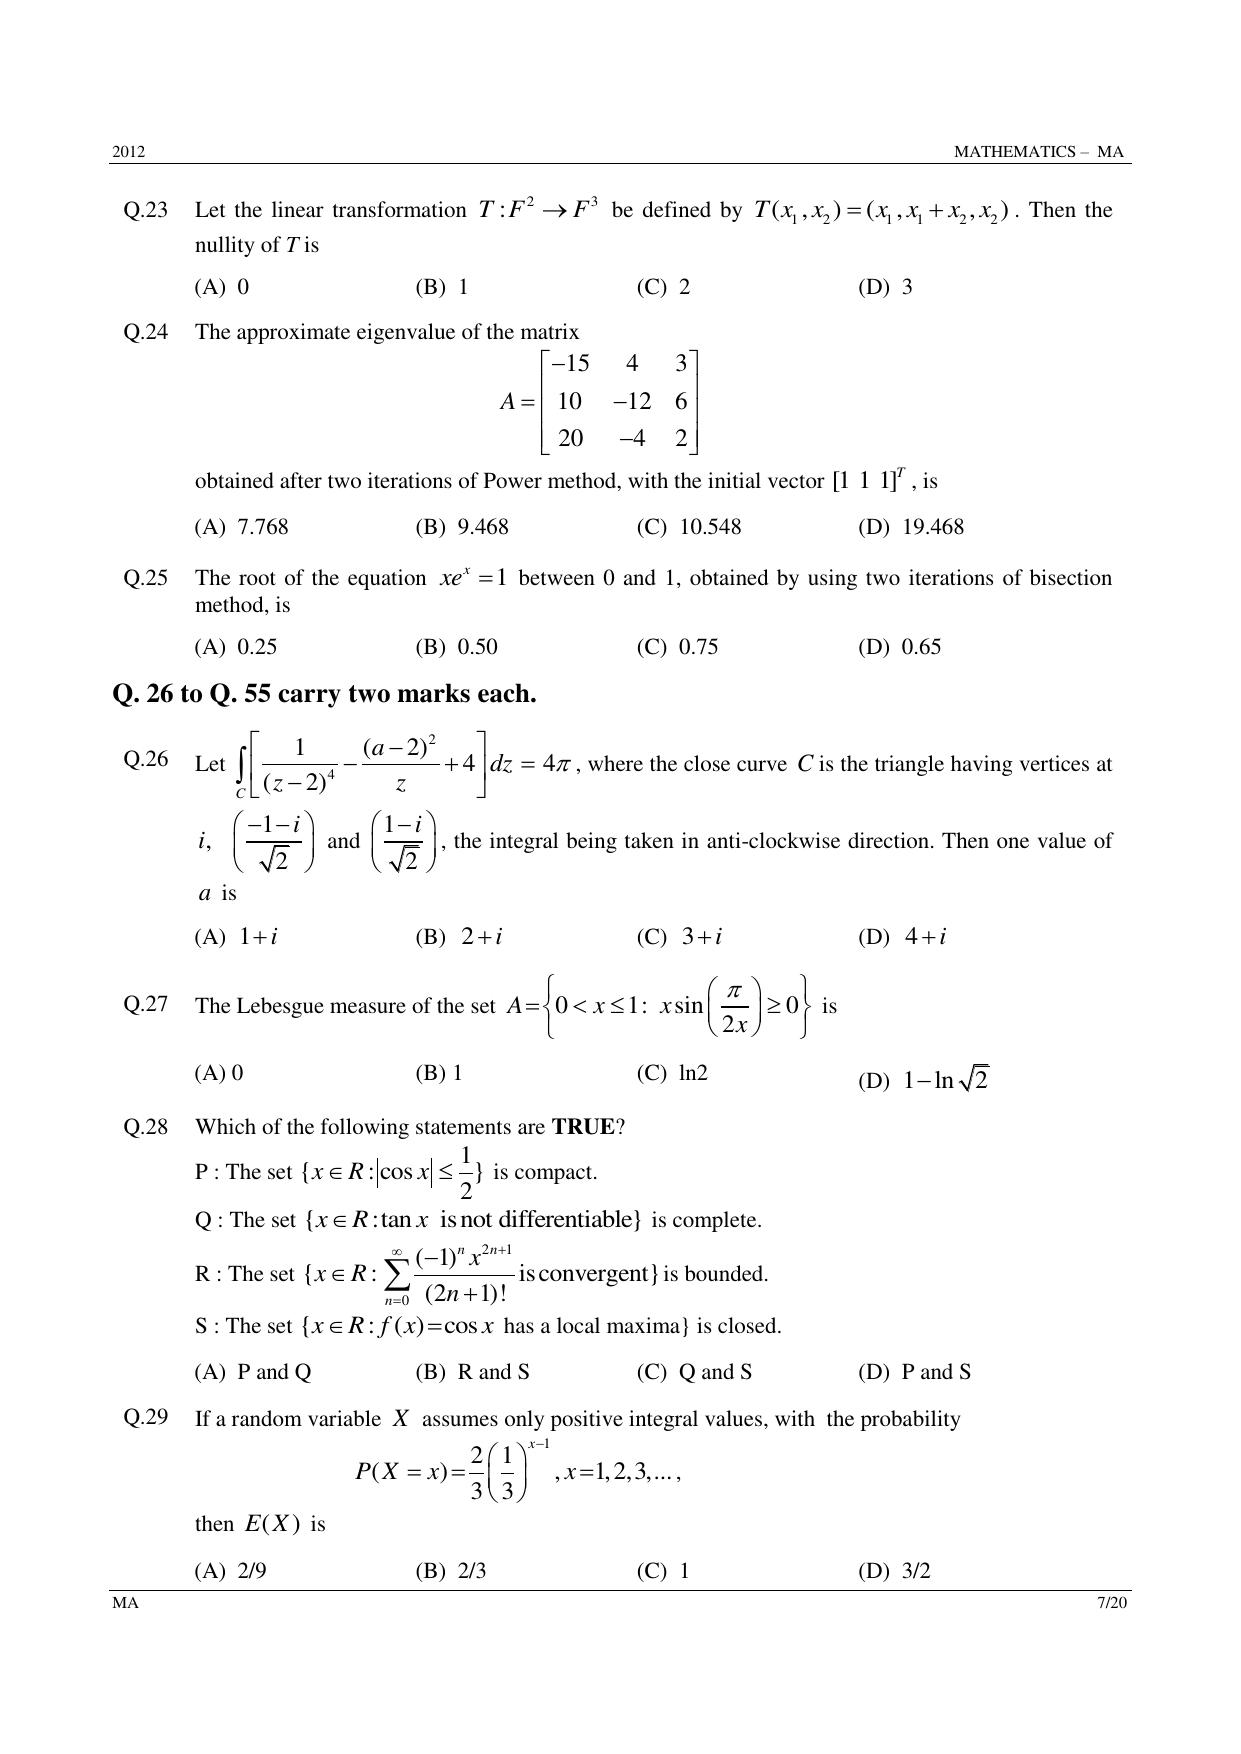 GATE 2012 Mathematics (MA) Question Paper with Answer Key - Page 7